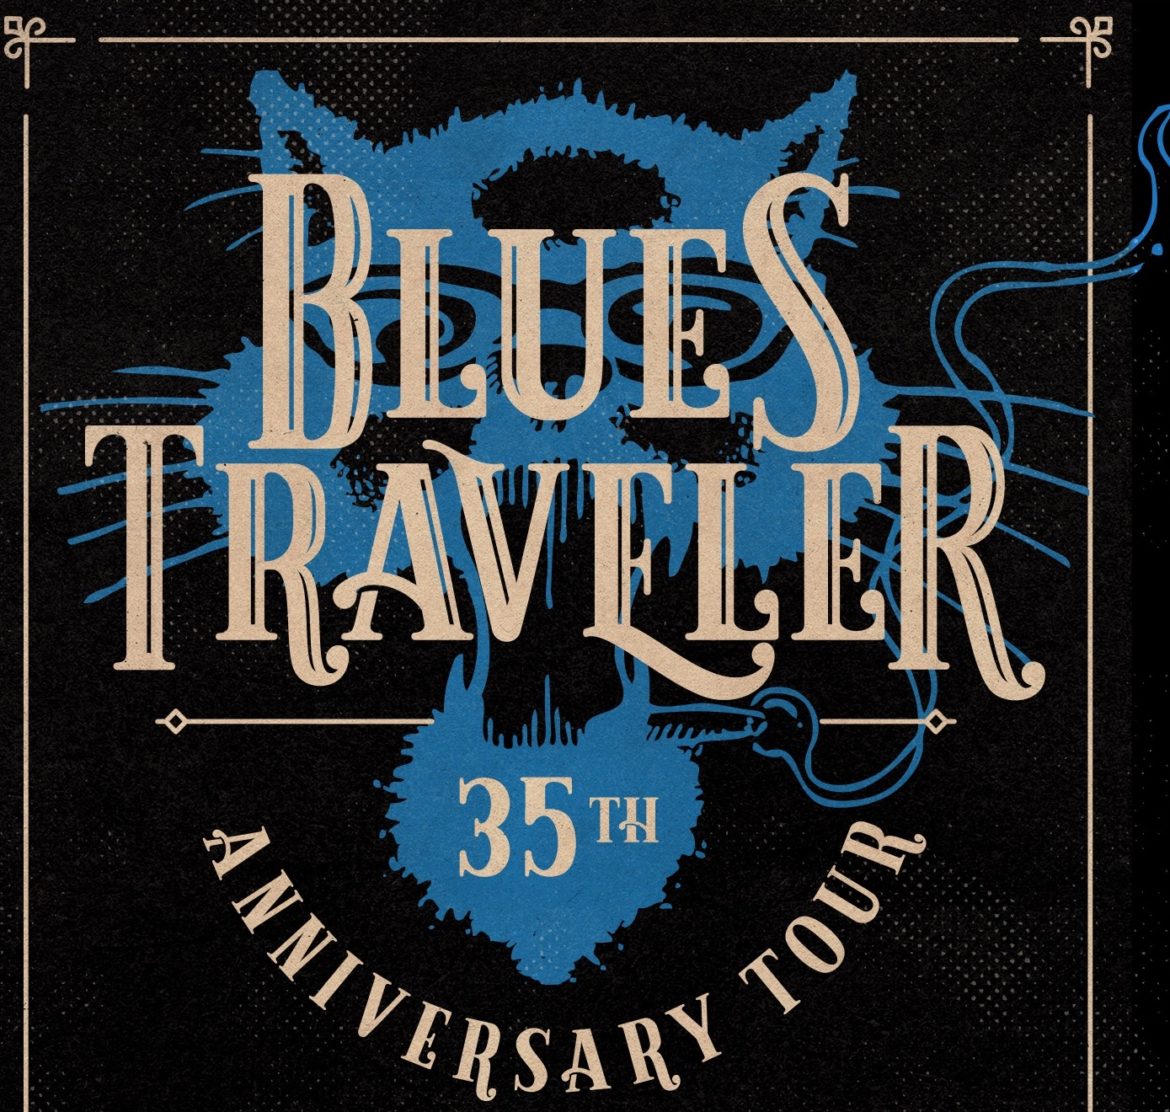 Blues Traveler Confirms 35th Anniversary Tour Dates